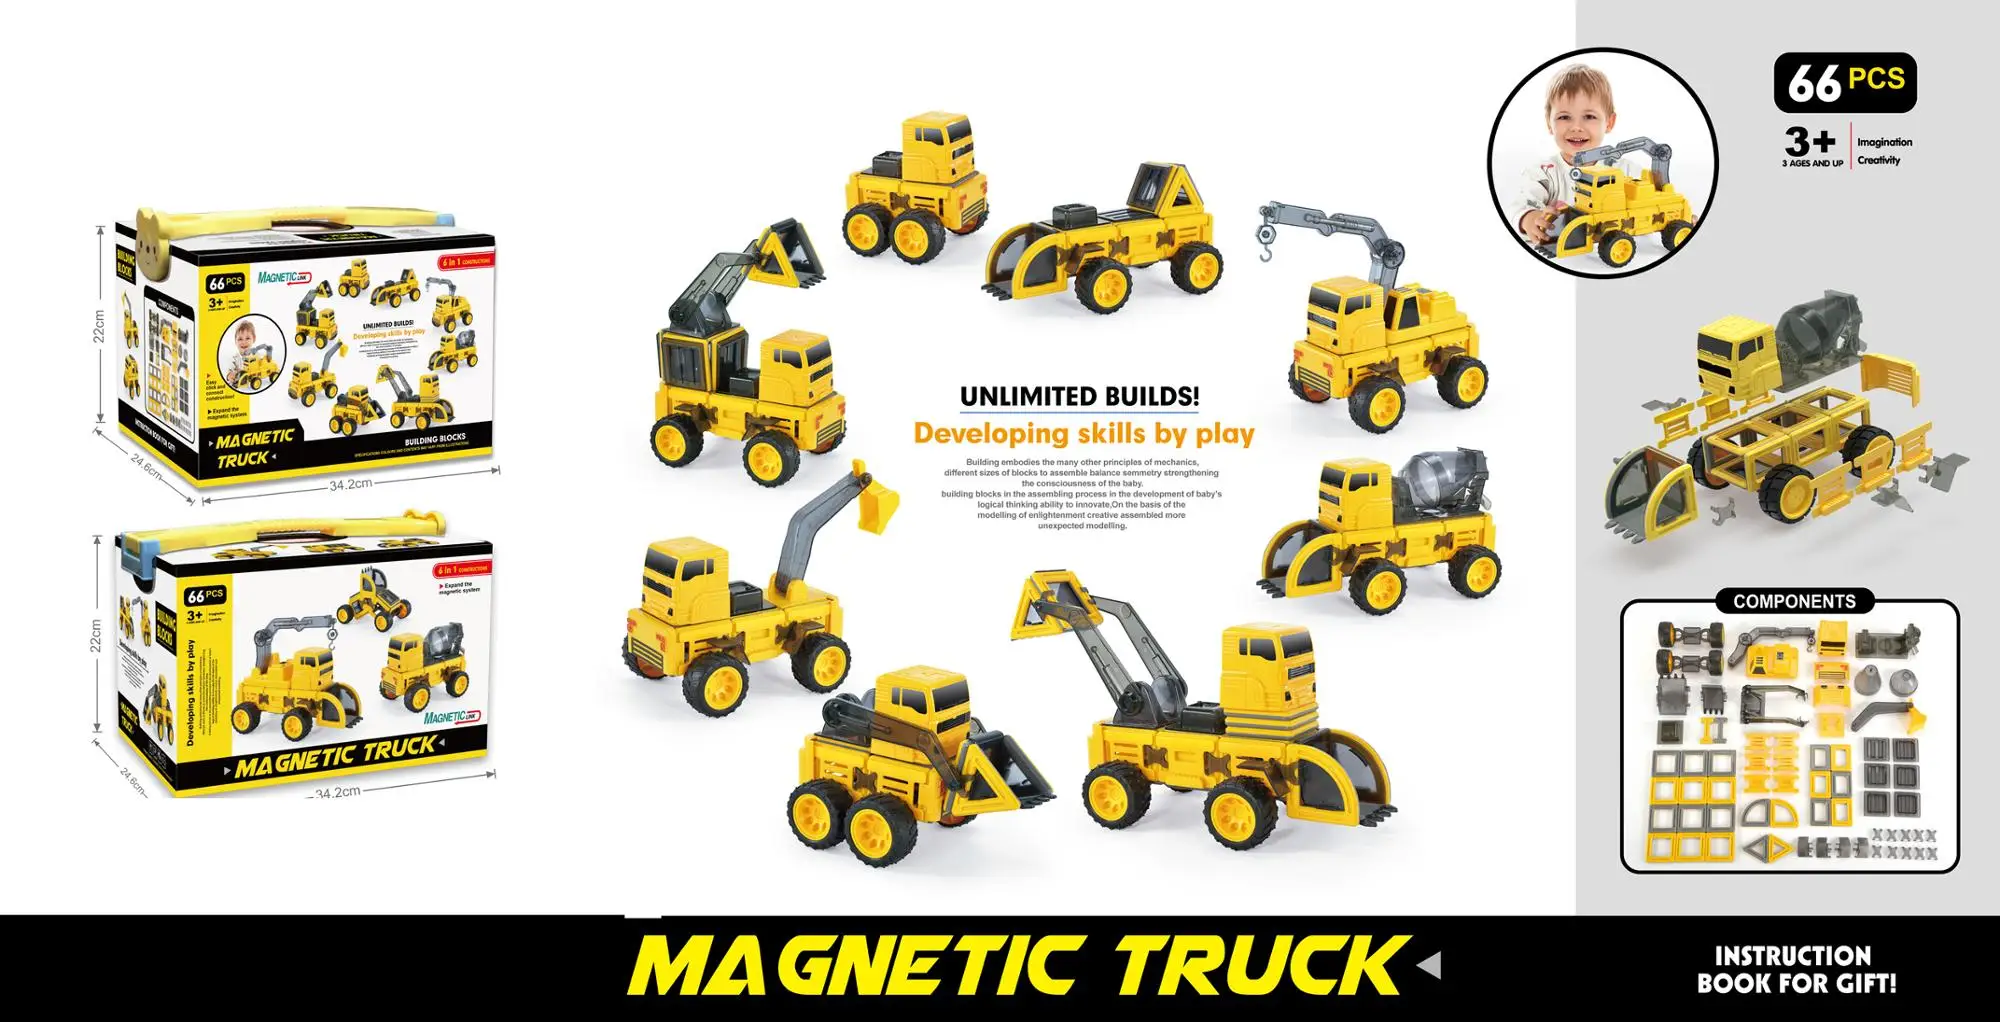 HS206082, Huwsin Toys, Magnetic truck set,magic building block for kids